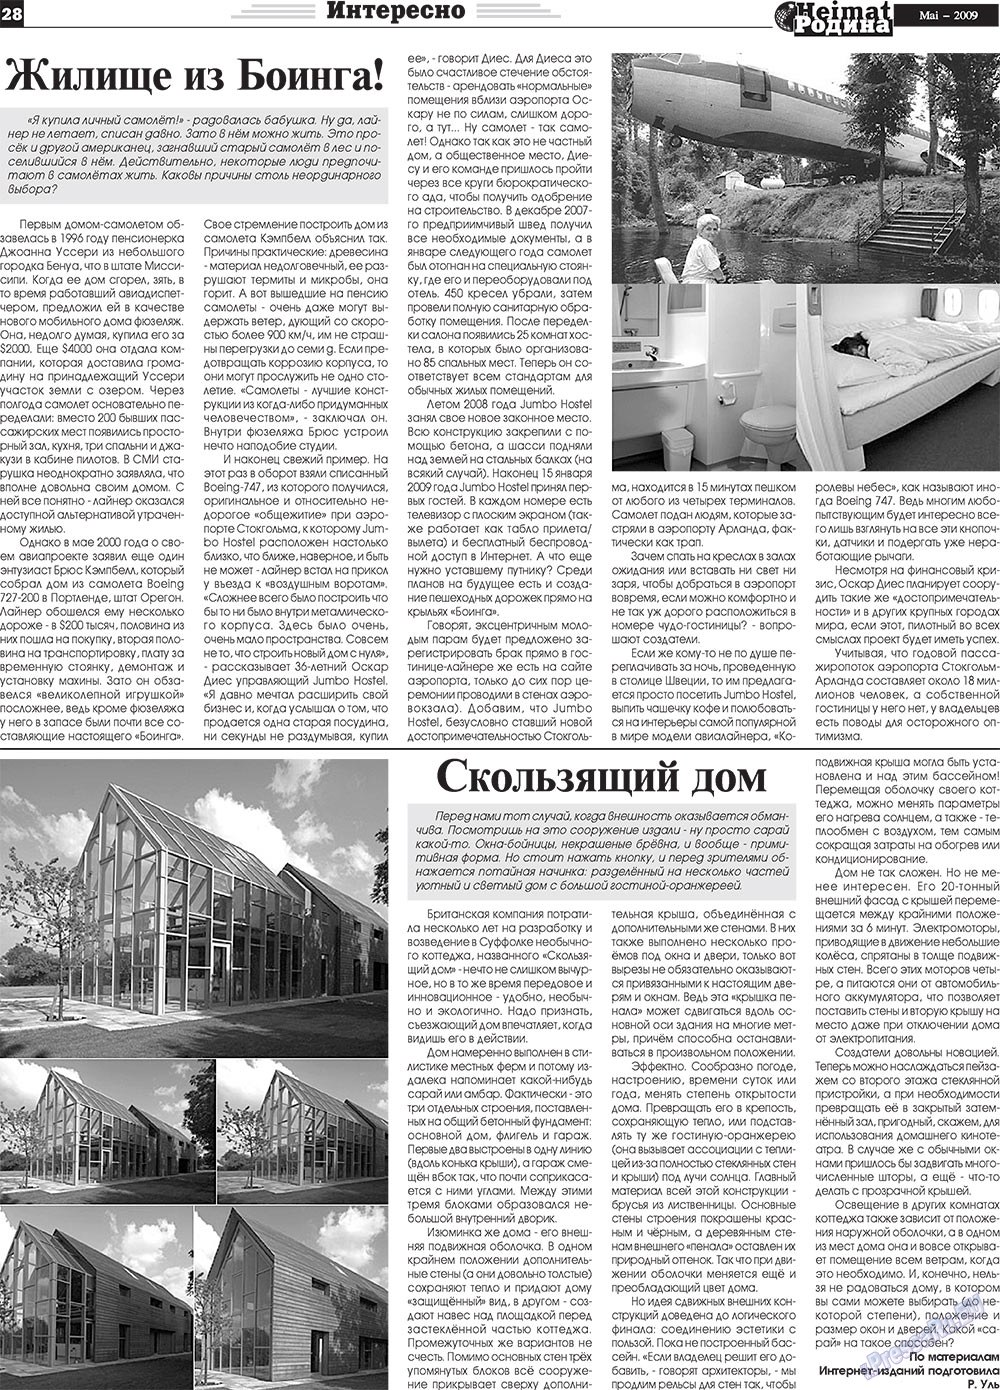 Heimat-Родина, газета. 2009 №5 стр.28